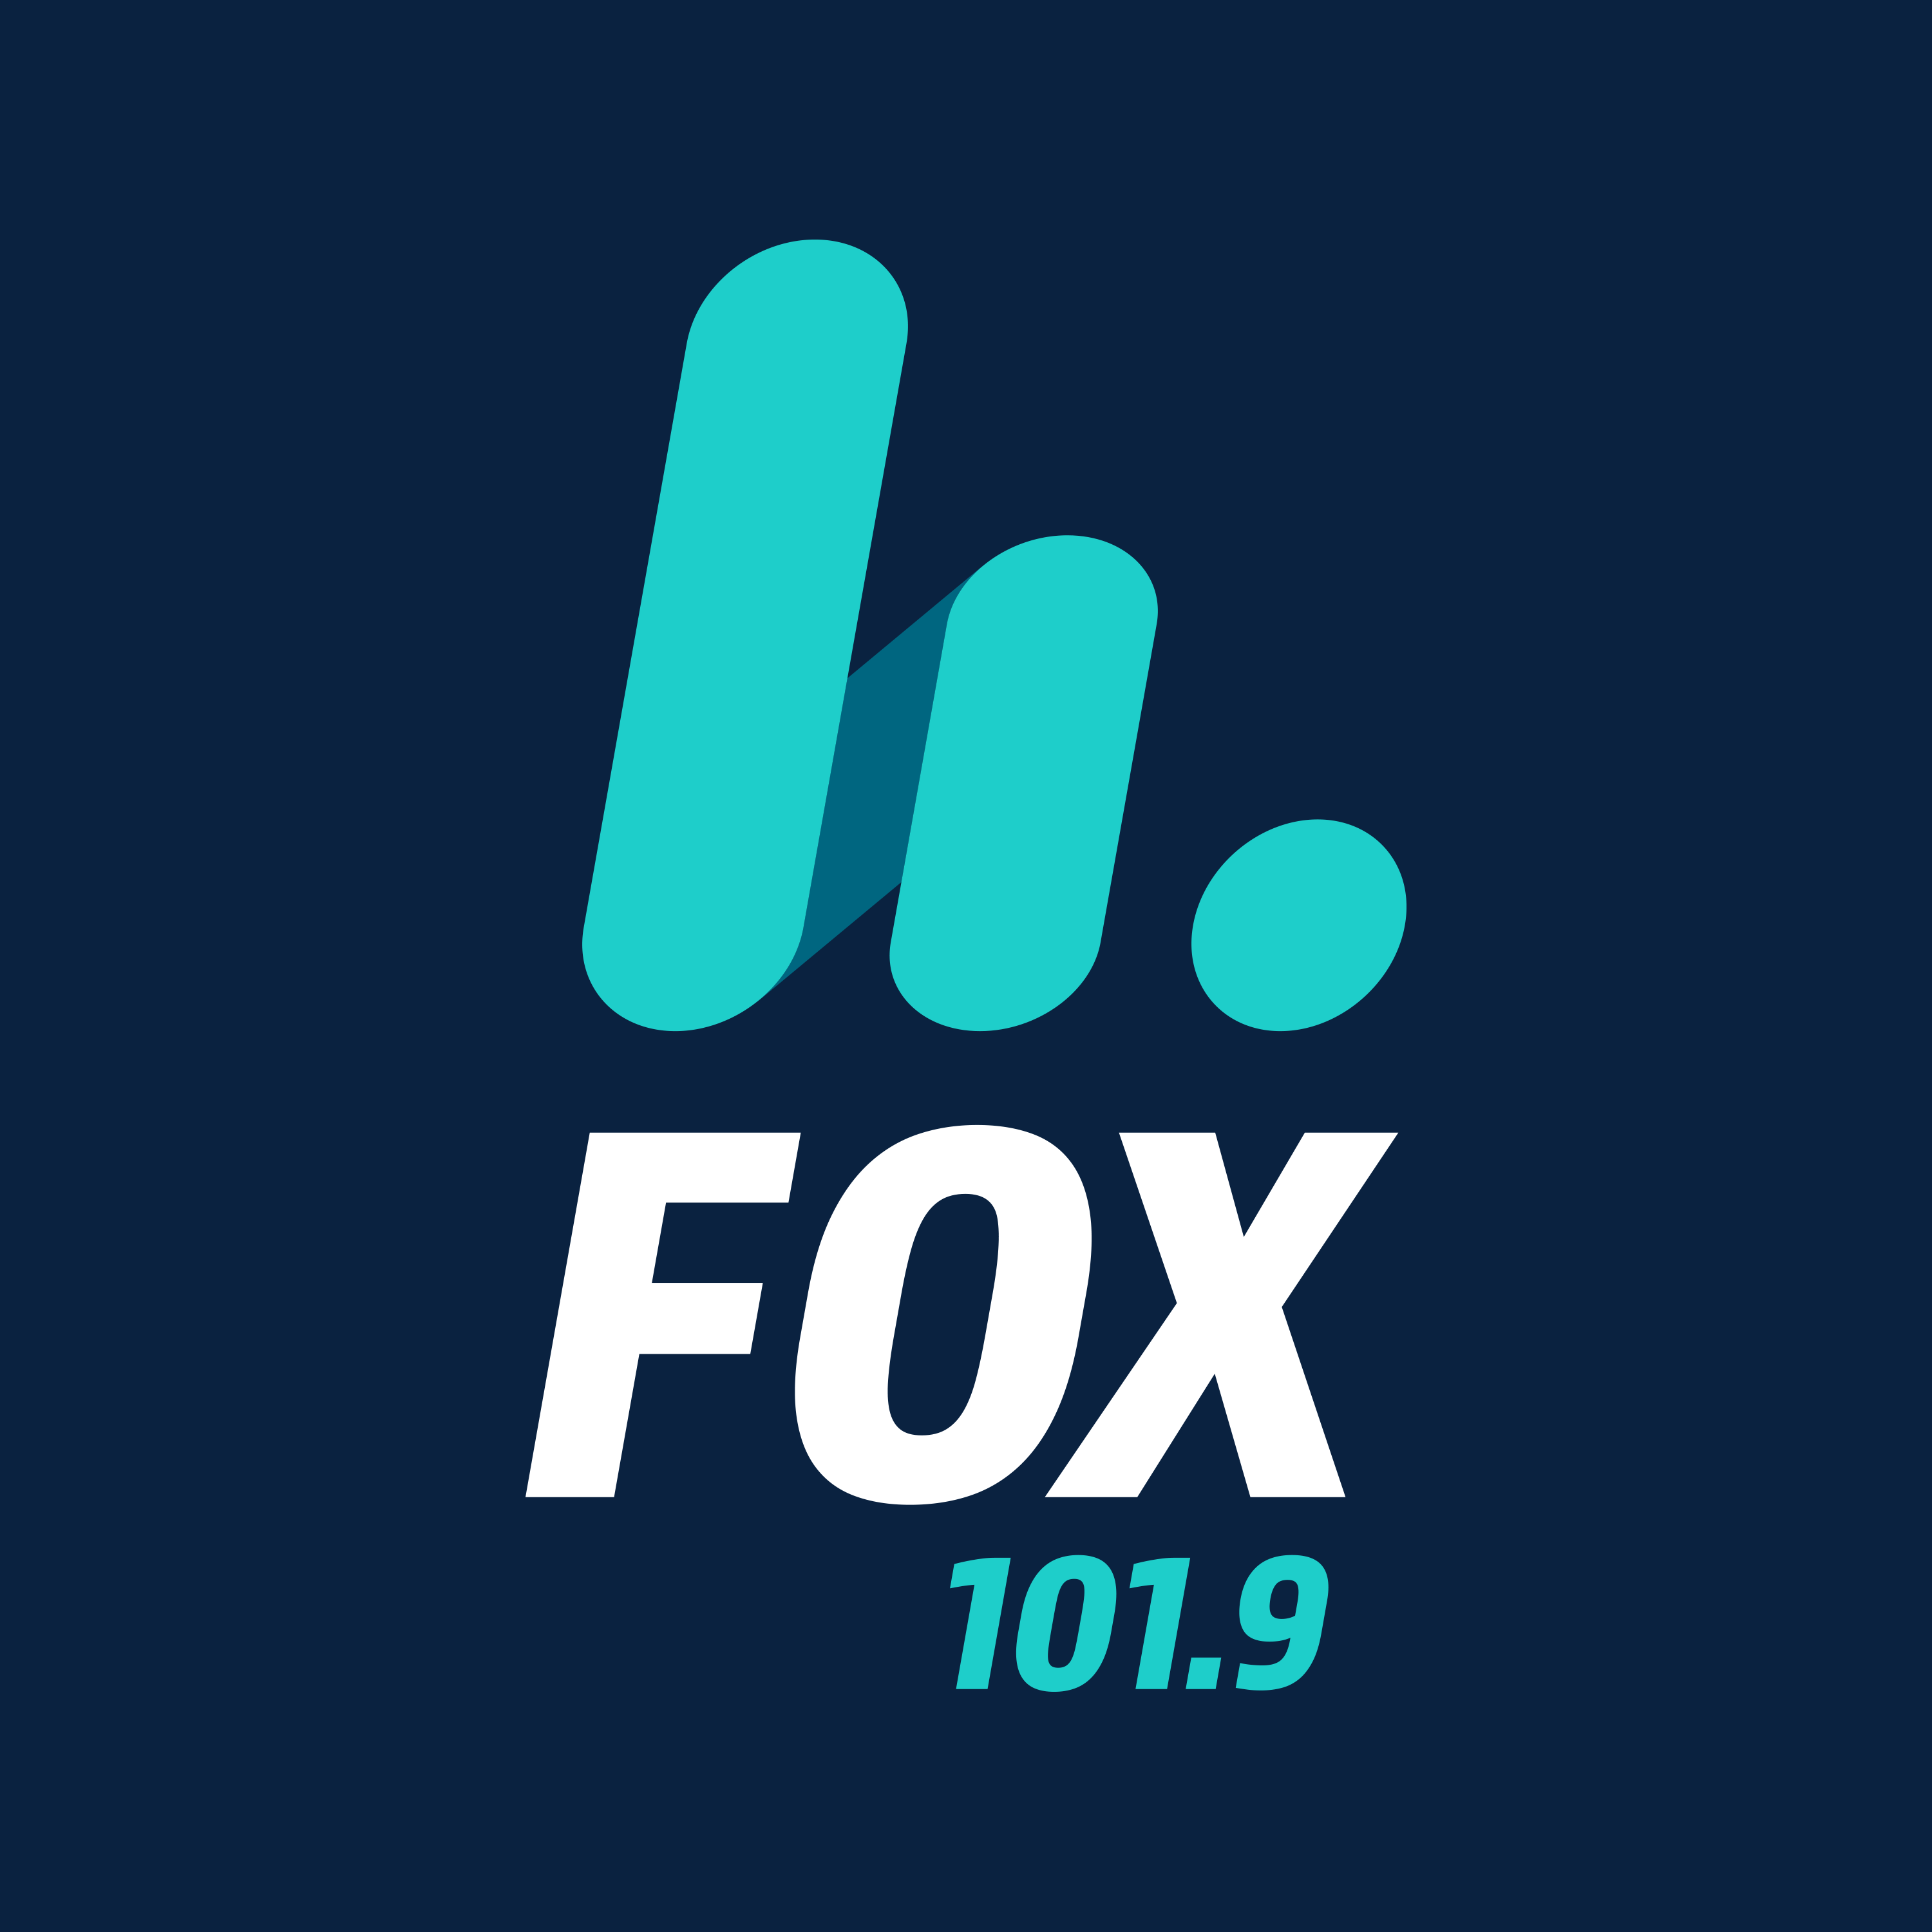 The Fox Melbourne logo